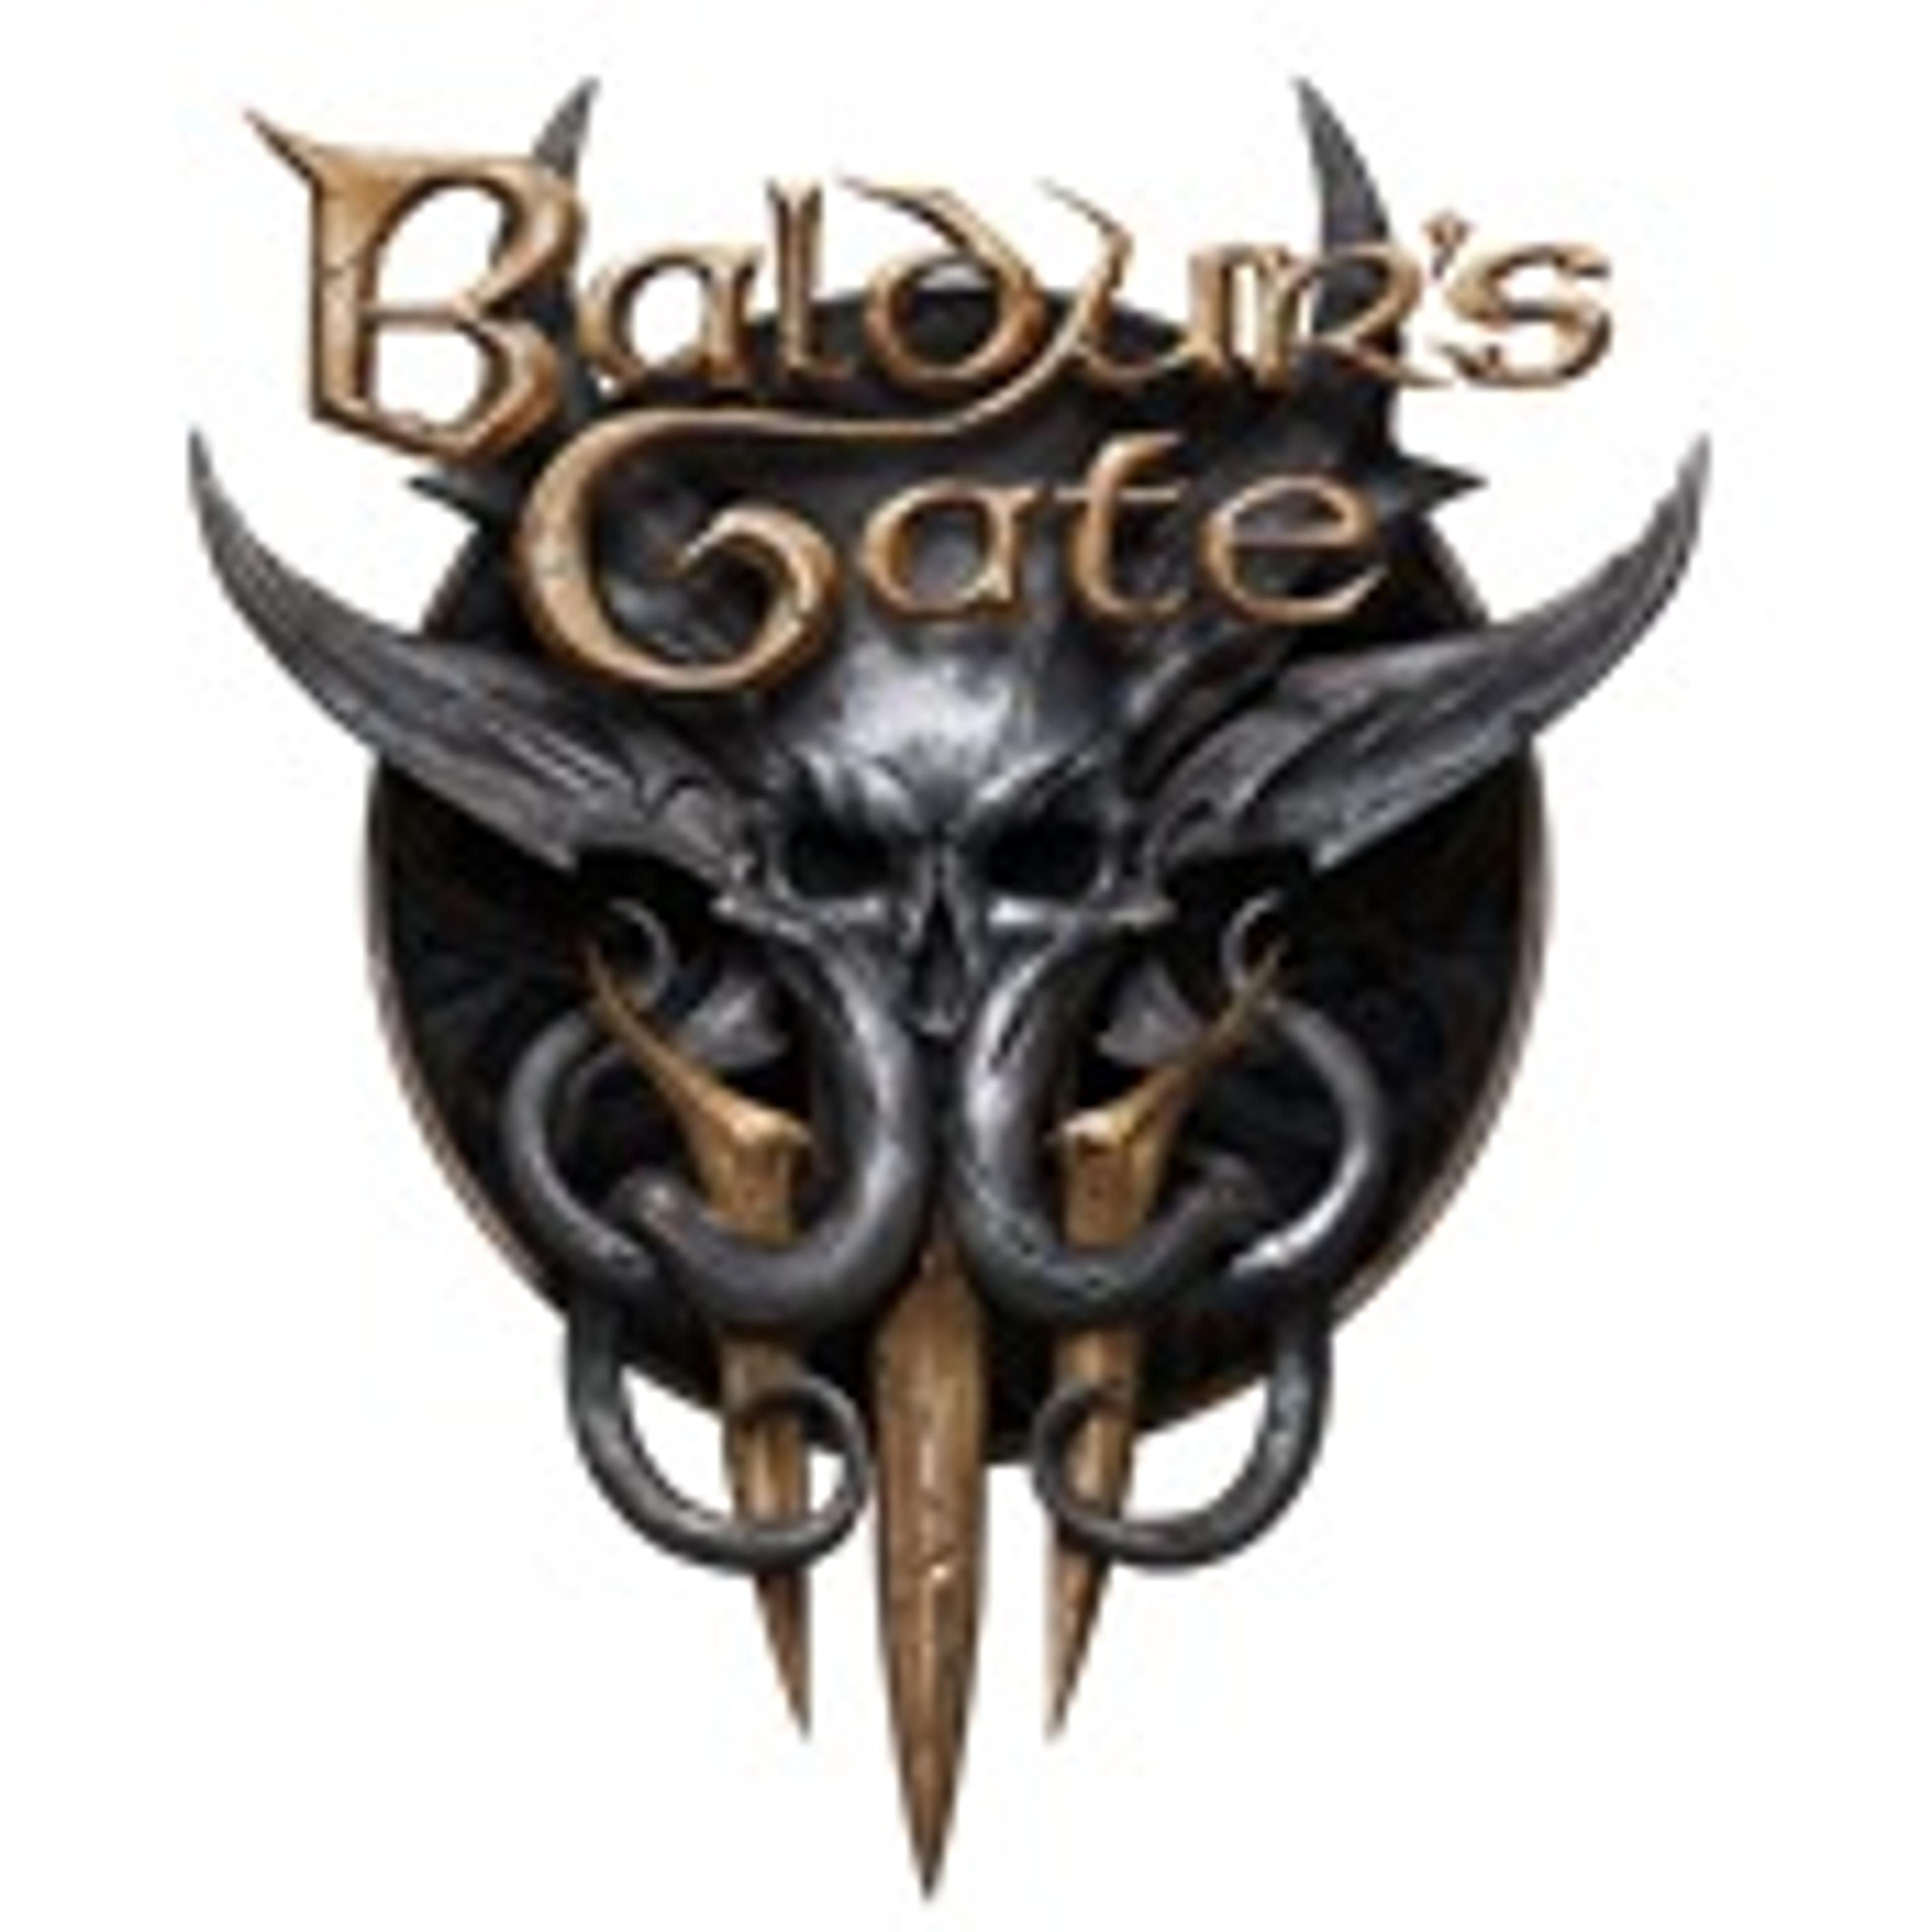 Baldurs Gate 3 via Steam Wallet Code